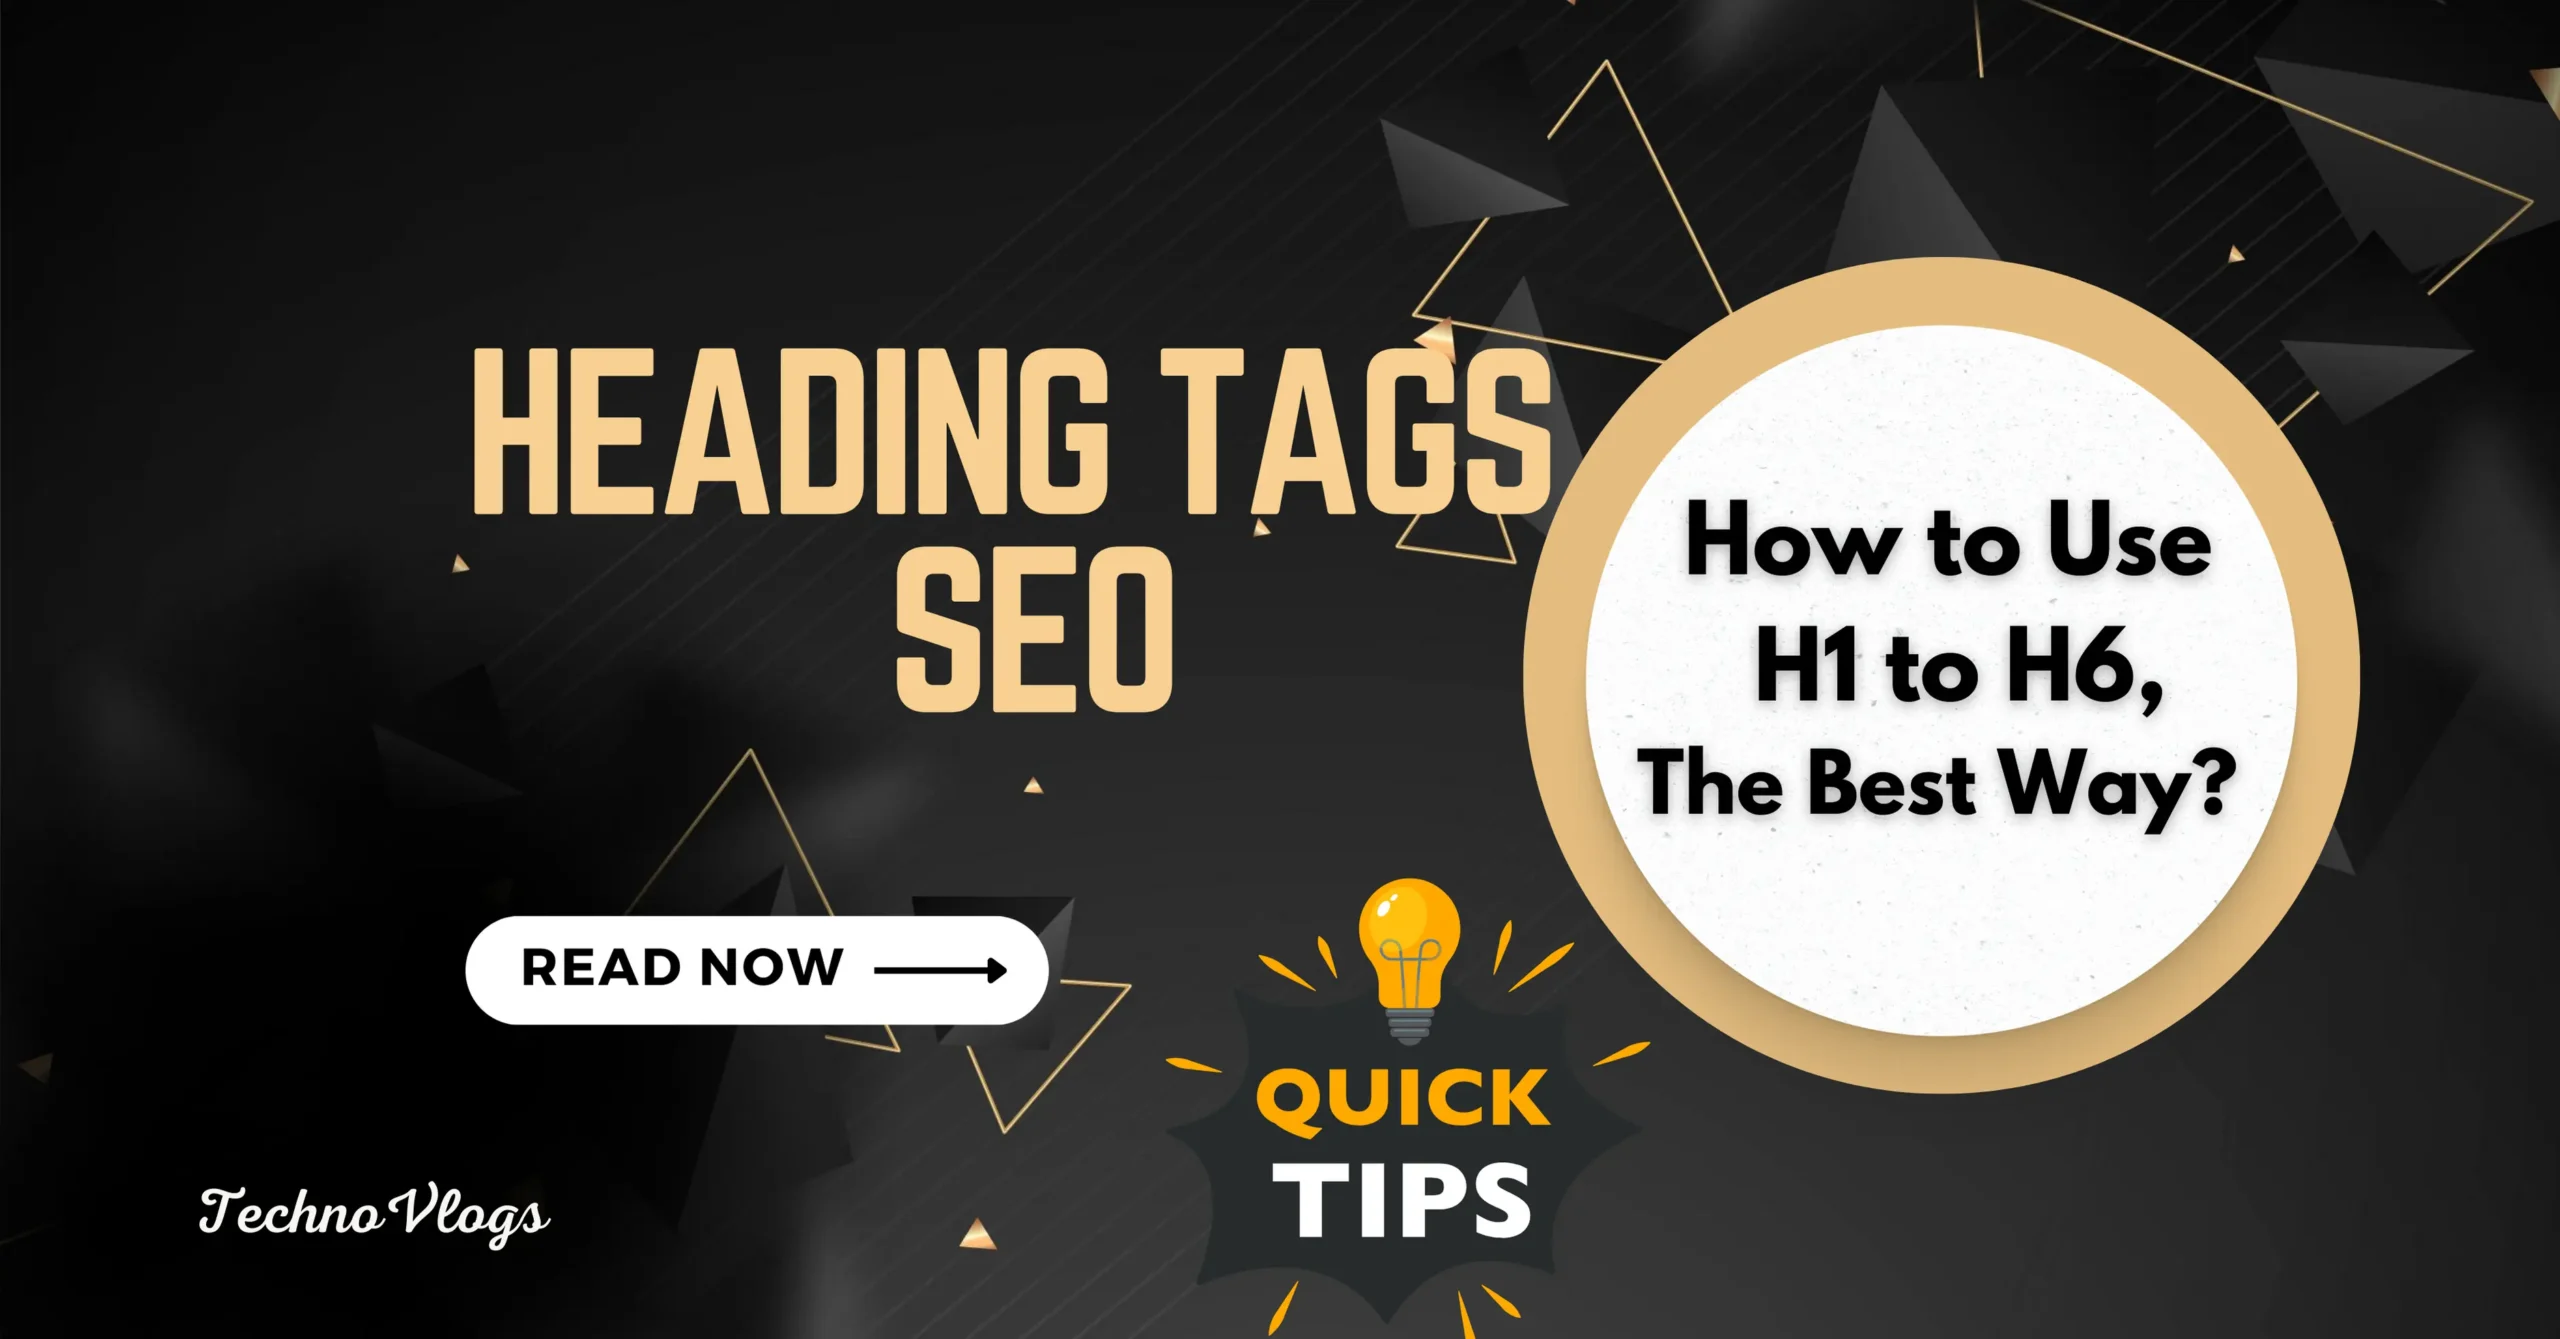 seo tips | h1 tag | heading tags | seo tags | seo guide | website tags | html header tags | TechnoVlogs